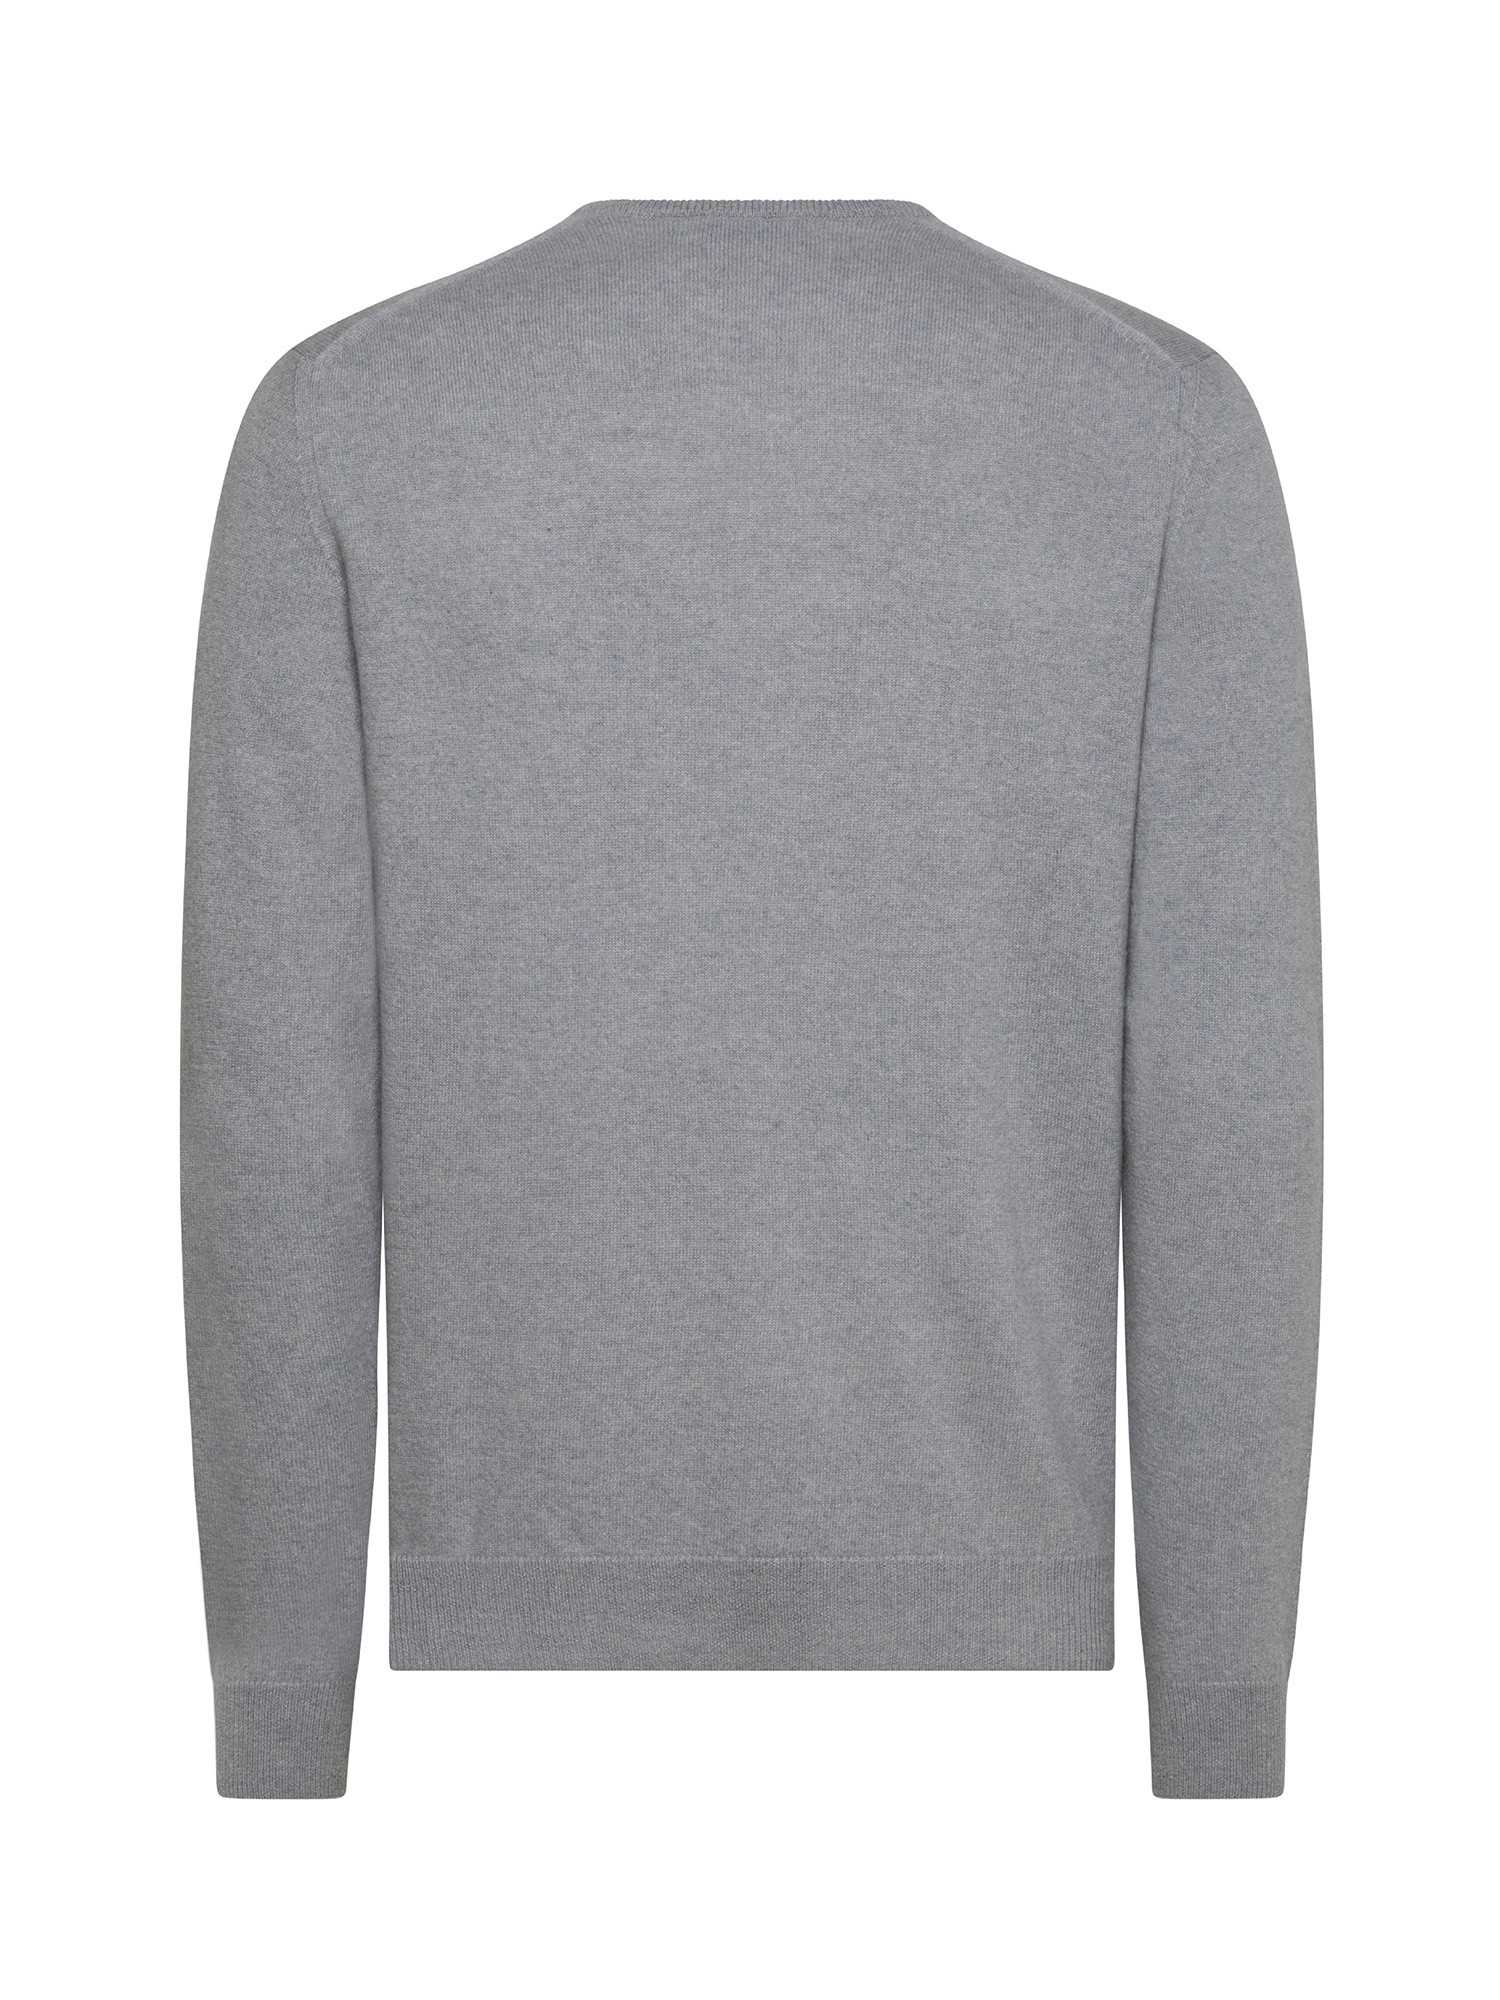 Pure cashmere crewneck pullover, Grey, large image number 1